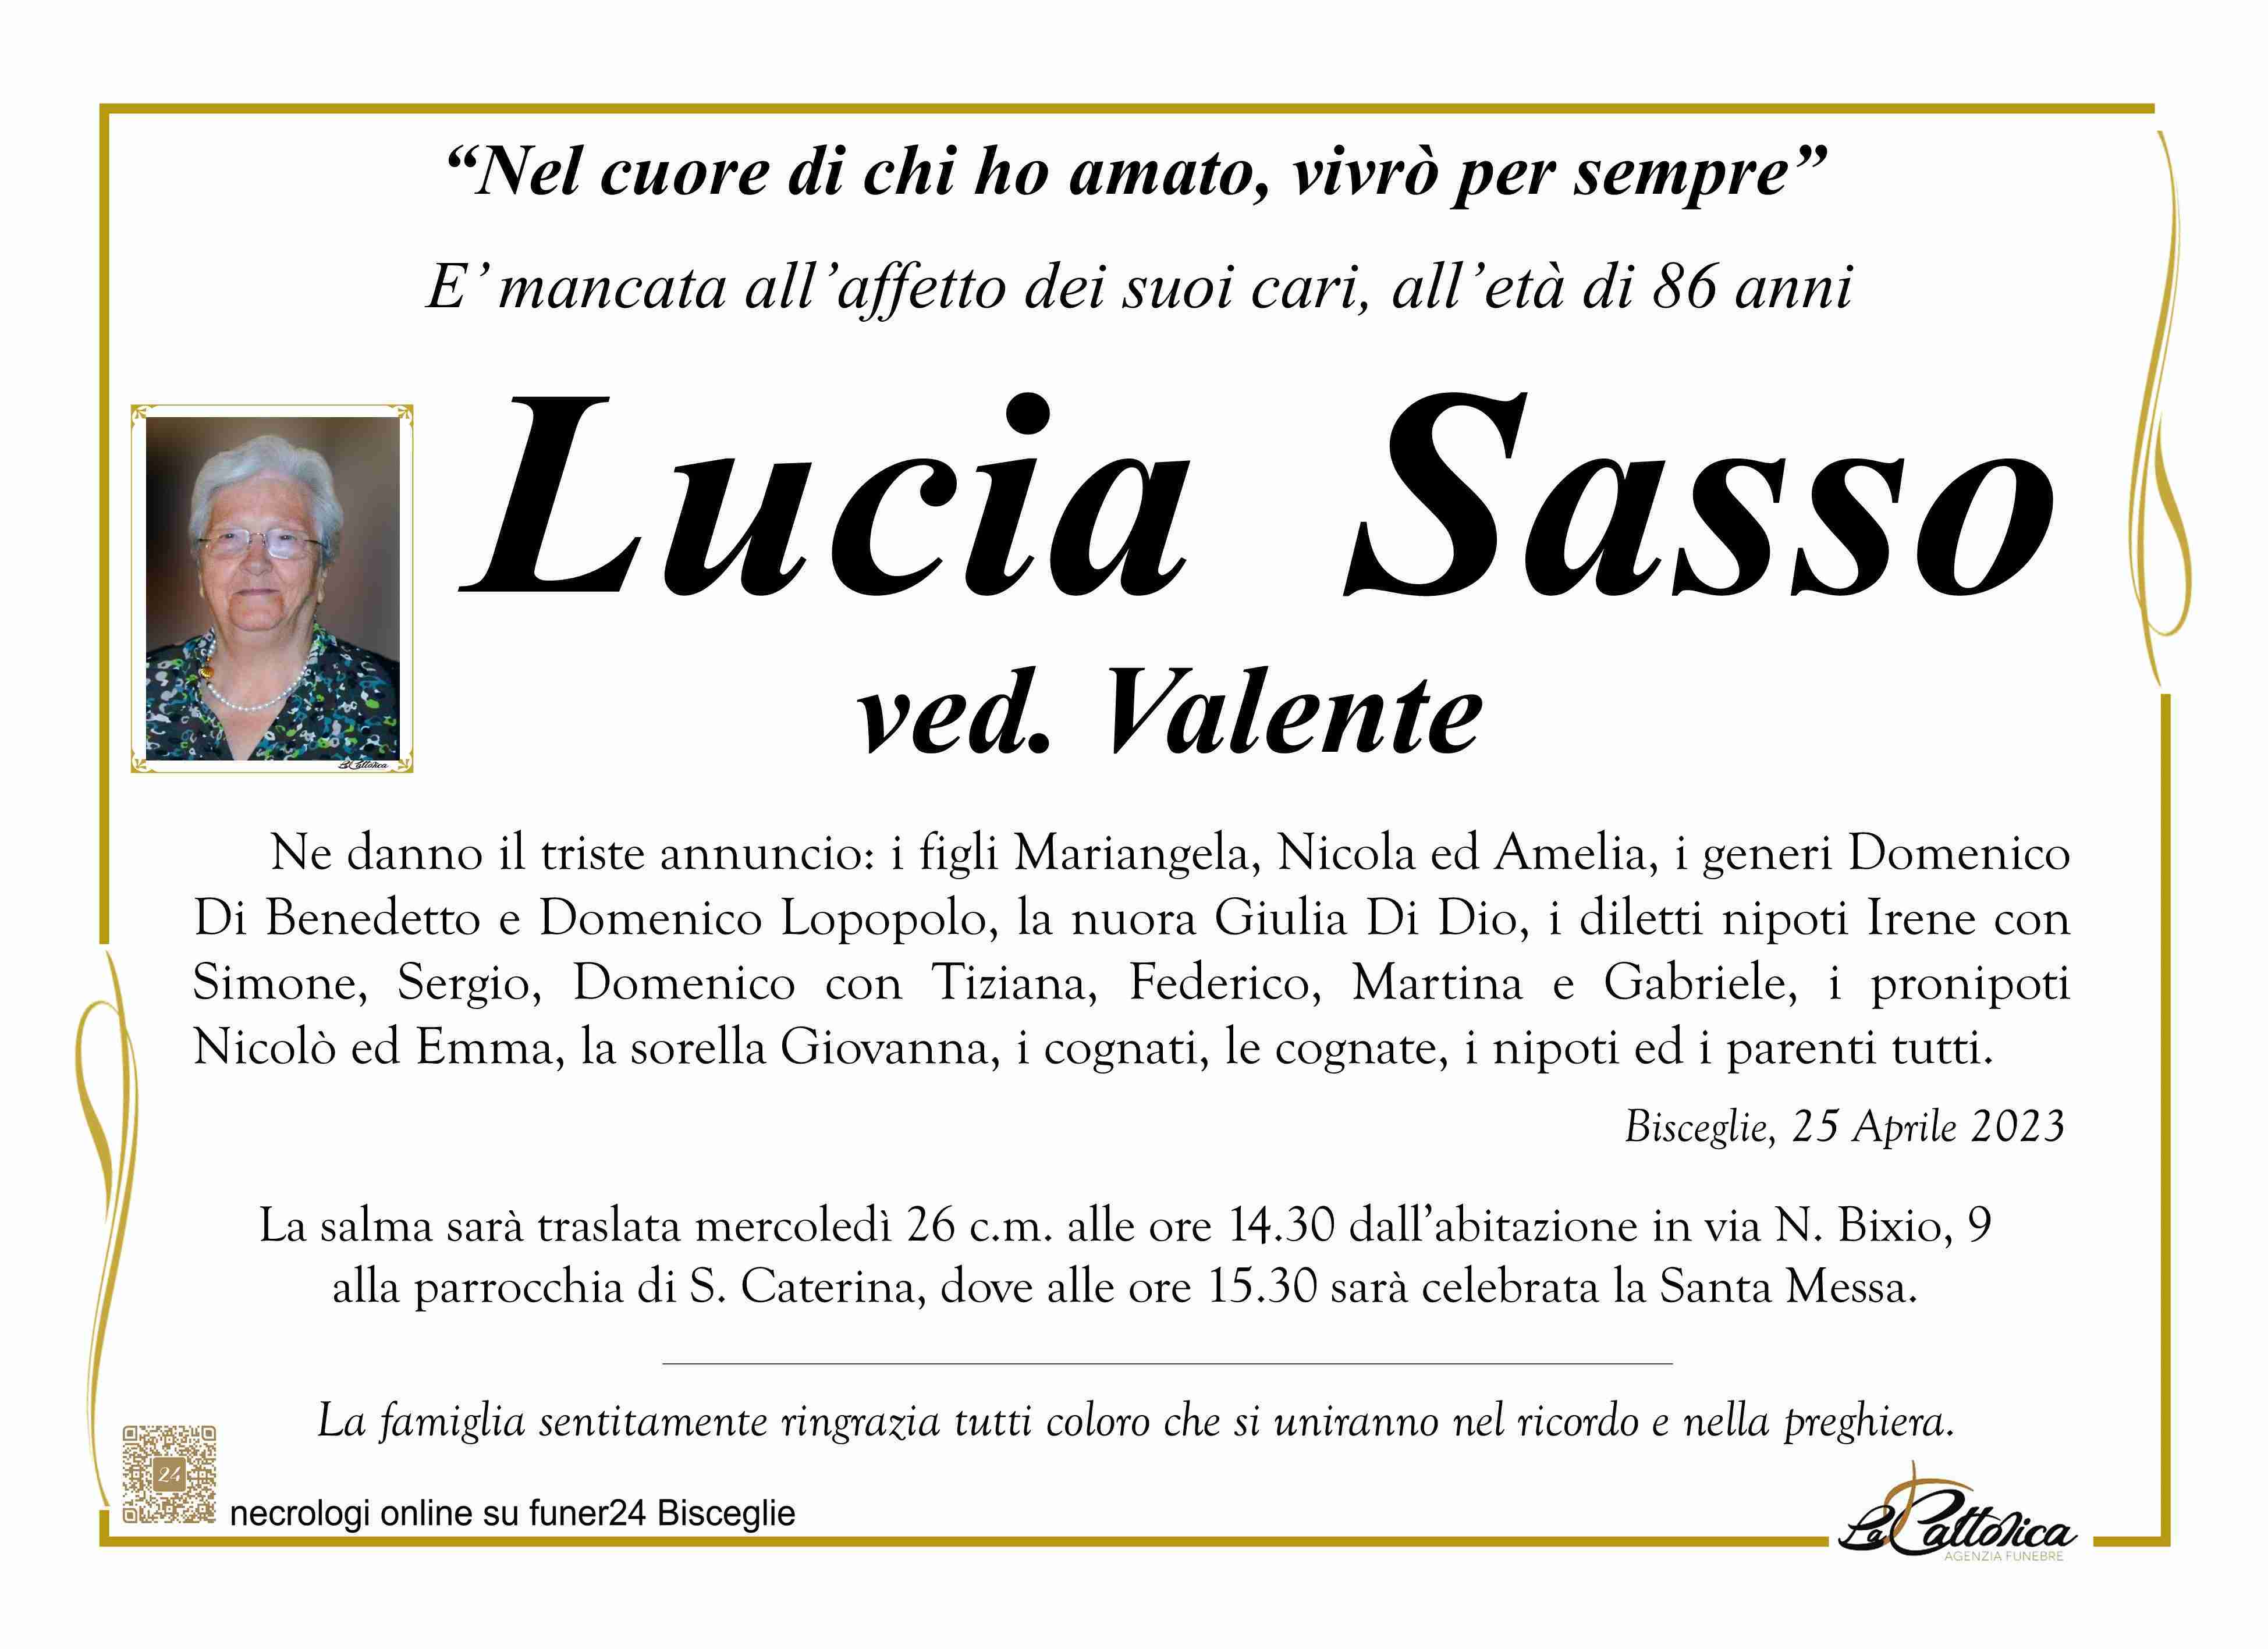 Lucia Sasso